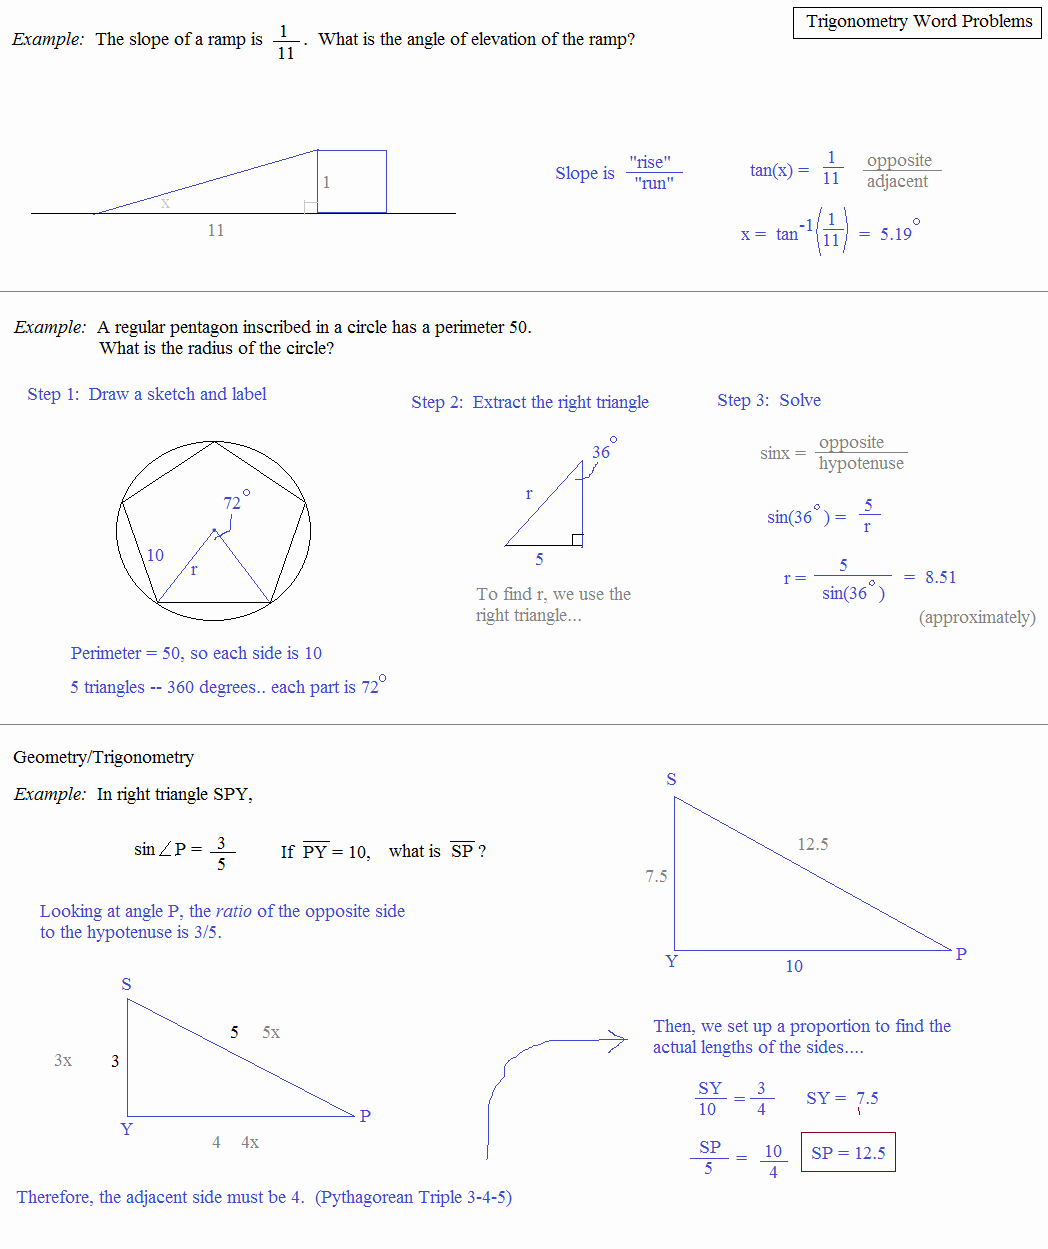 Trigonometry Word Problems Worksheet Luxury Math Plane Trigonometry Word Problems